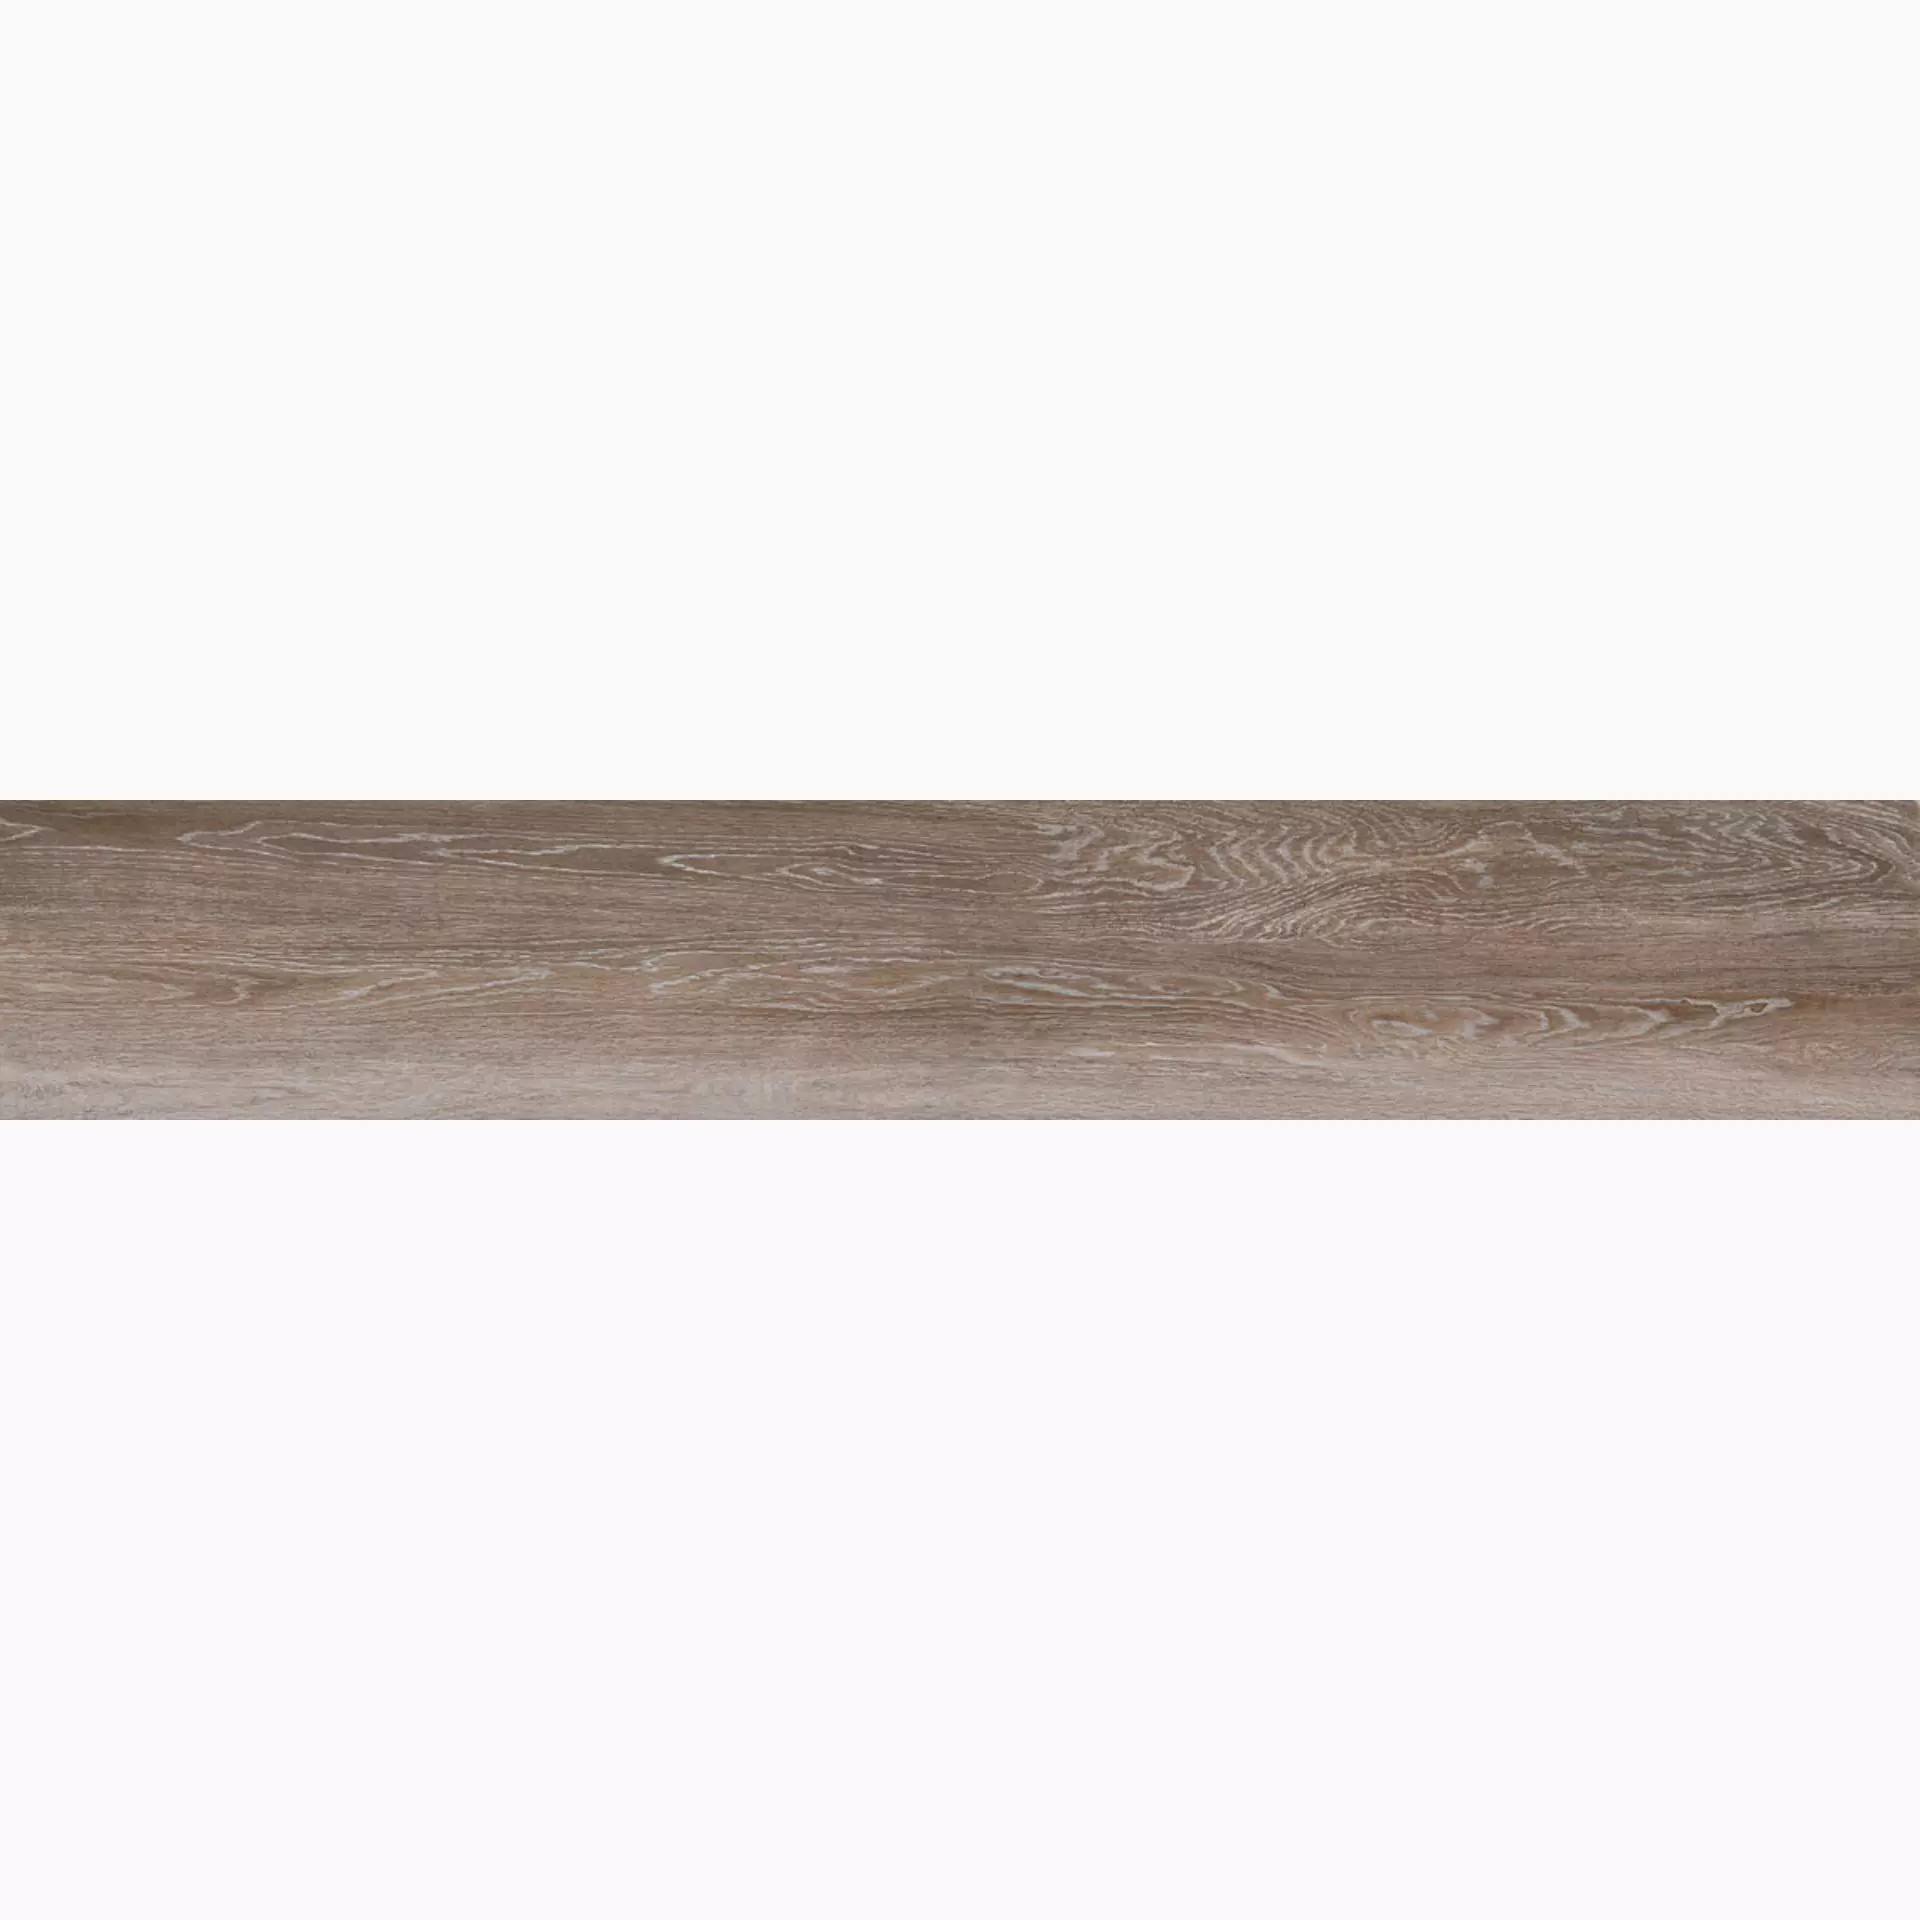 La Faenza Legno Brown Natural Slate Cut Matt 181685 30x180cm rectified 10mm - LEGNO 3018T RM